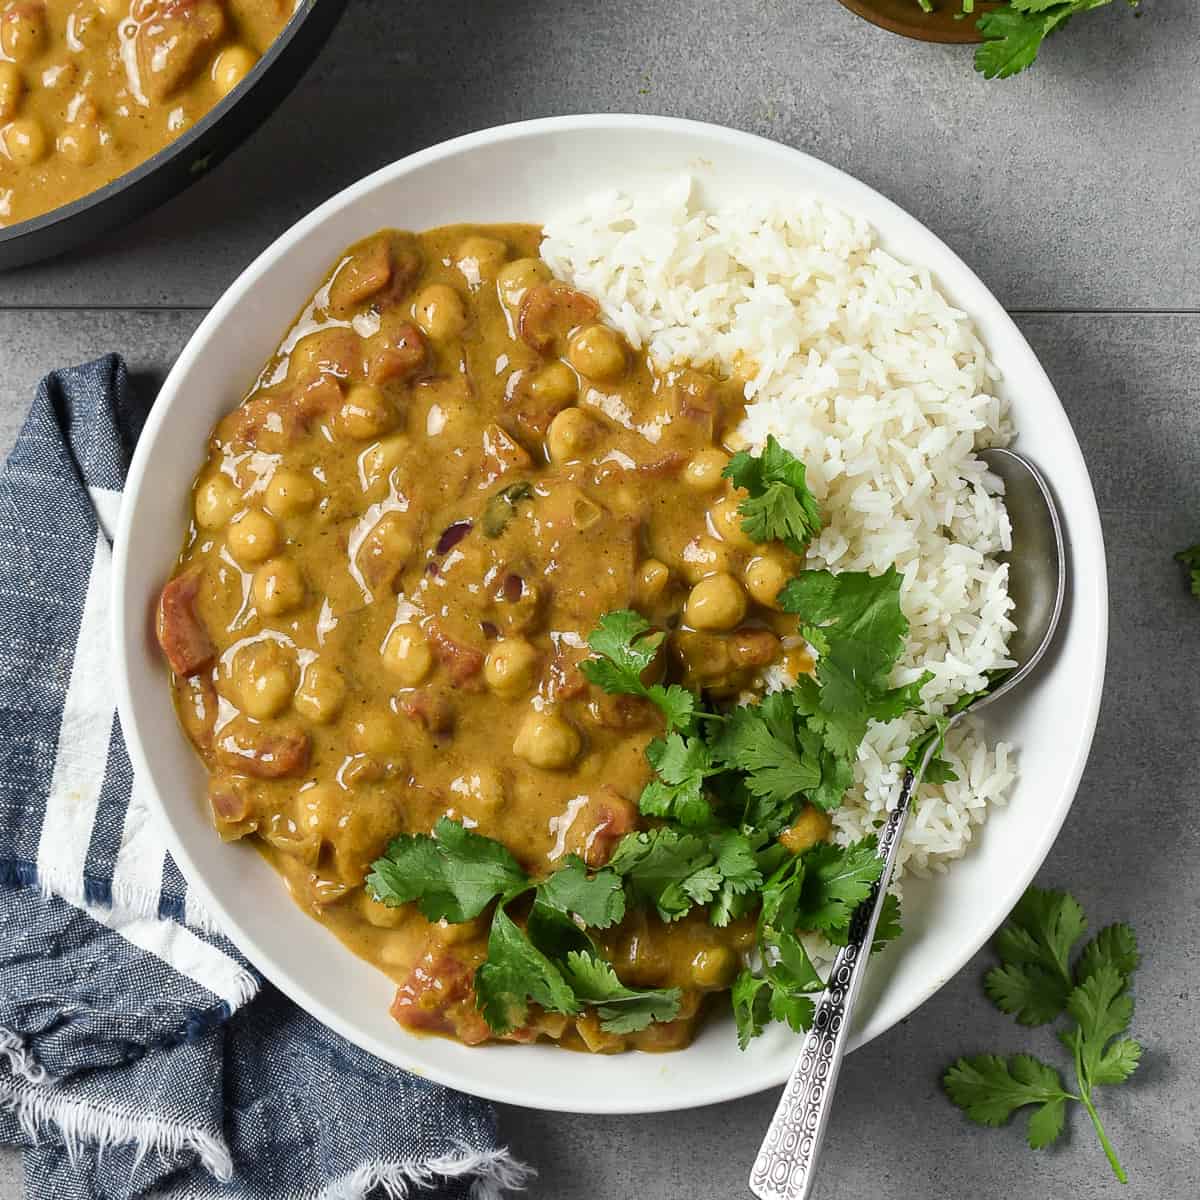 Easy Vegan Chickpea Curry